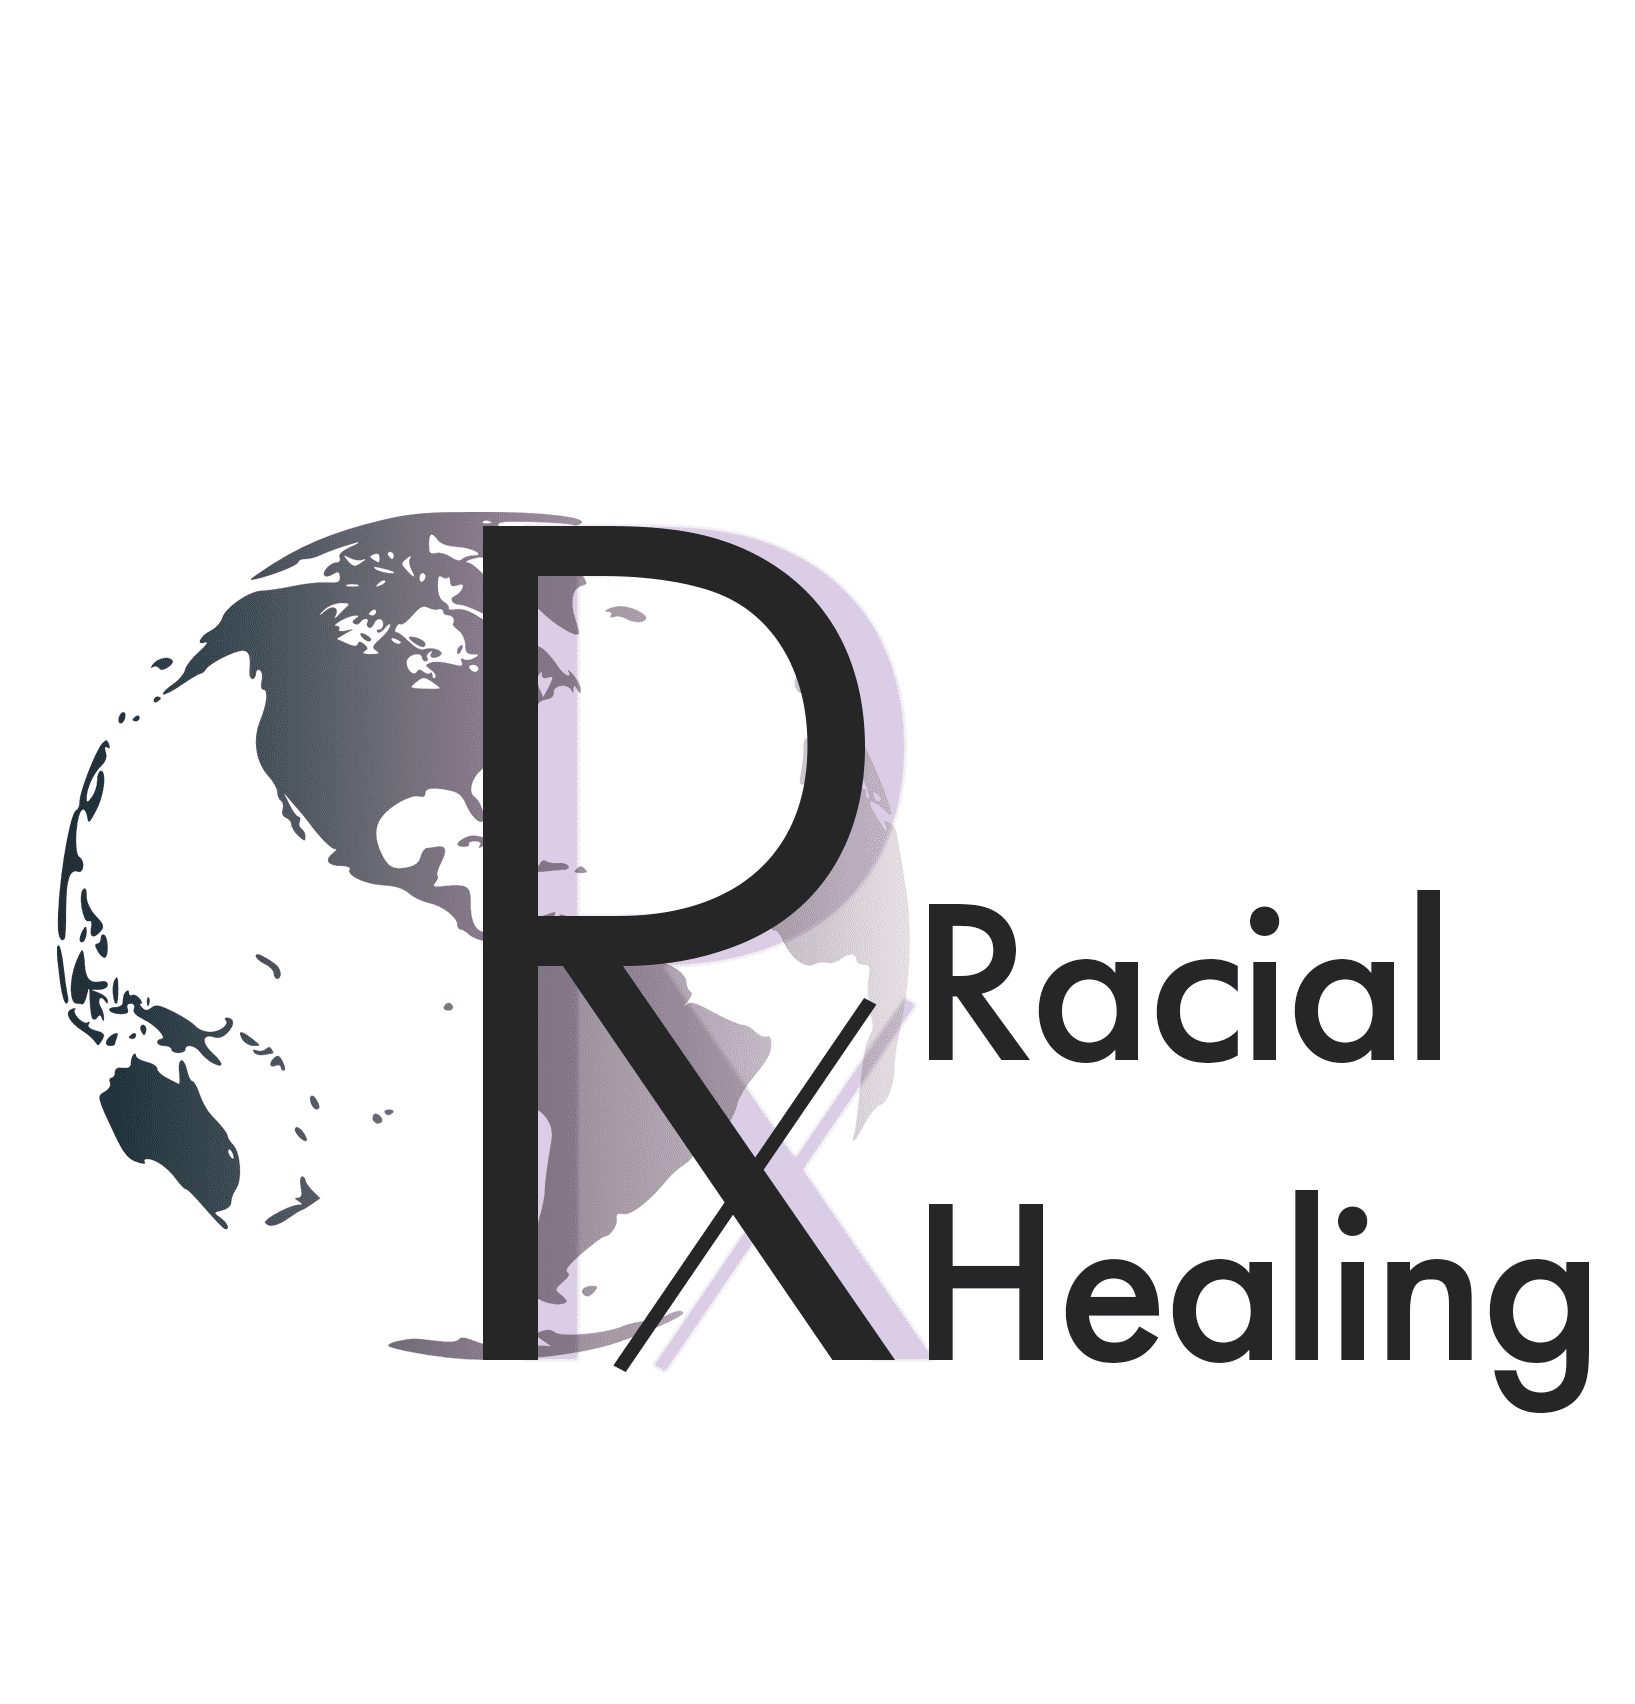 RxRacial_Healing logo